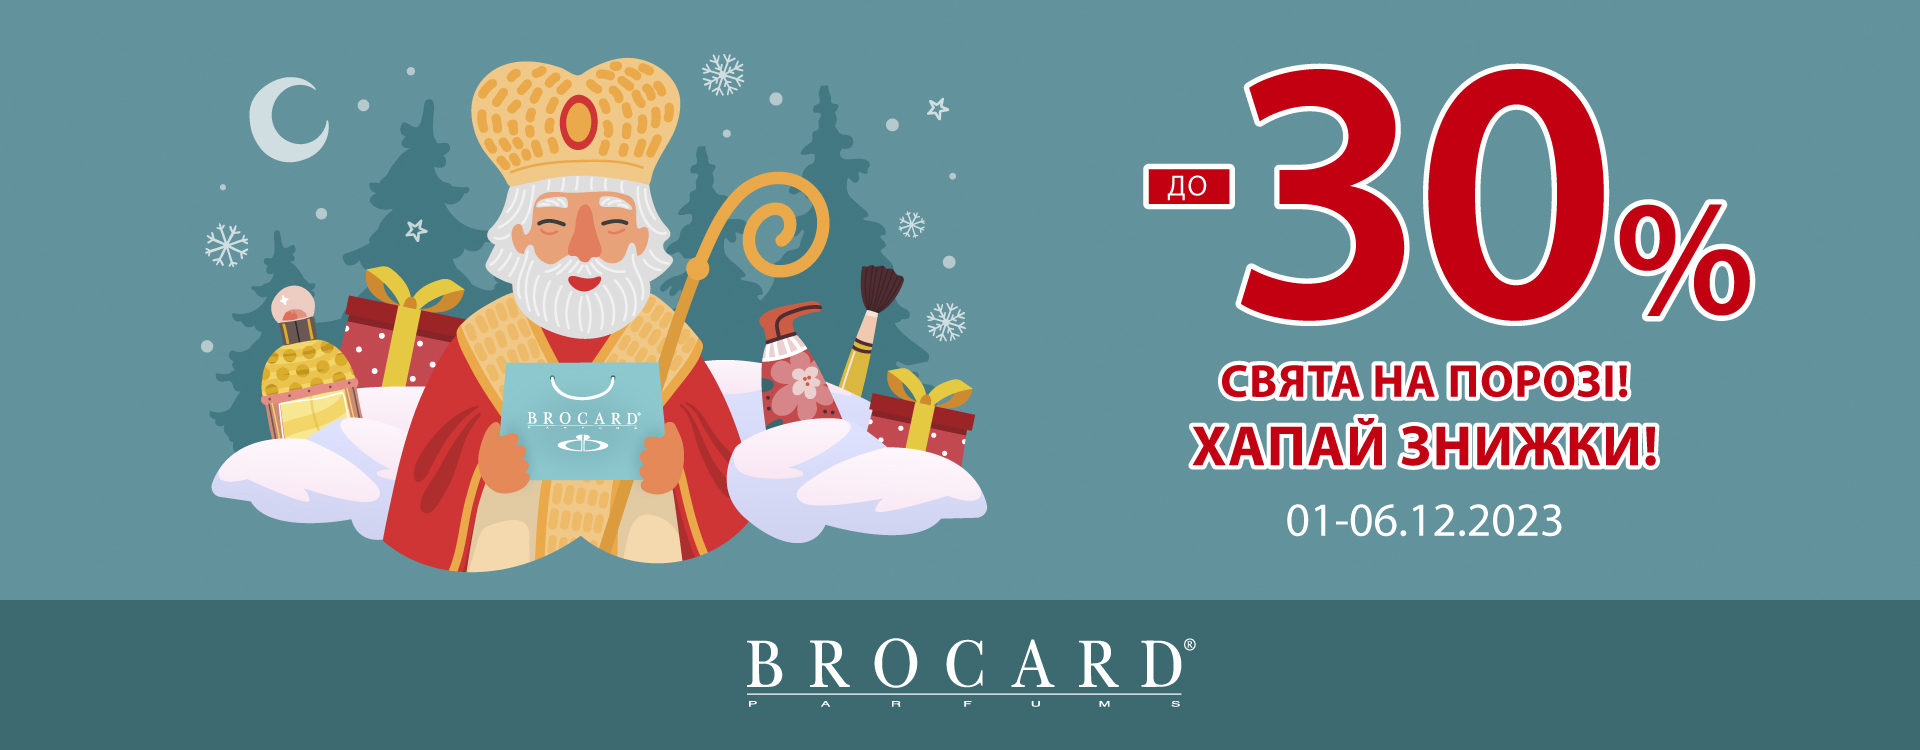 Celebrate Saint Nicholas Day with BROCARD